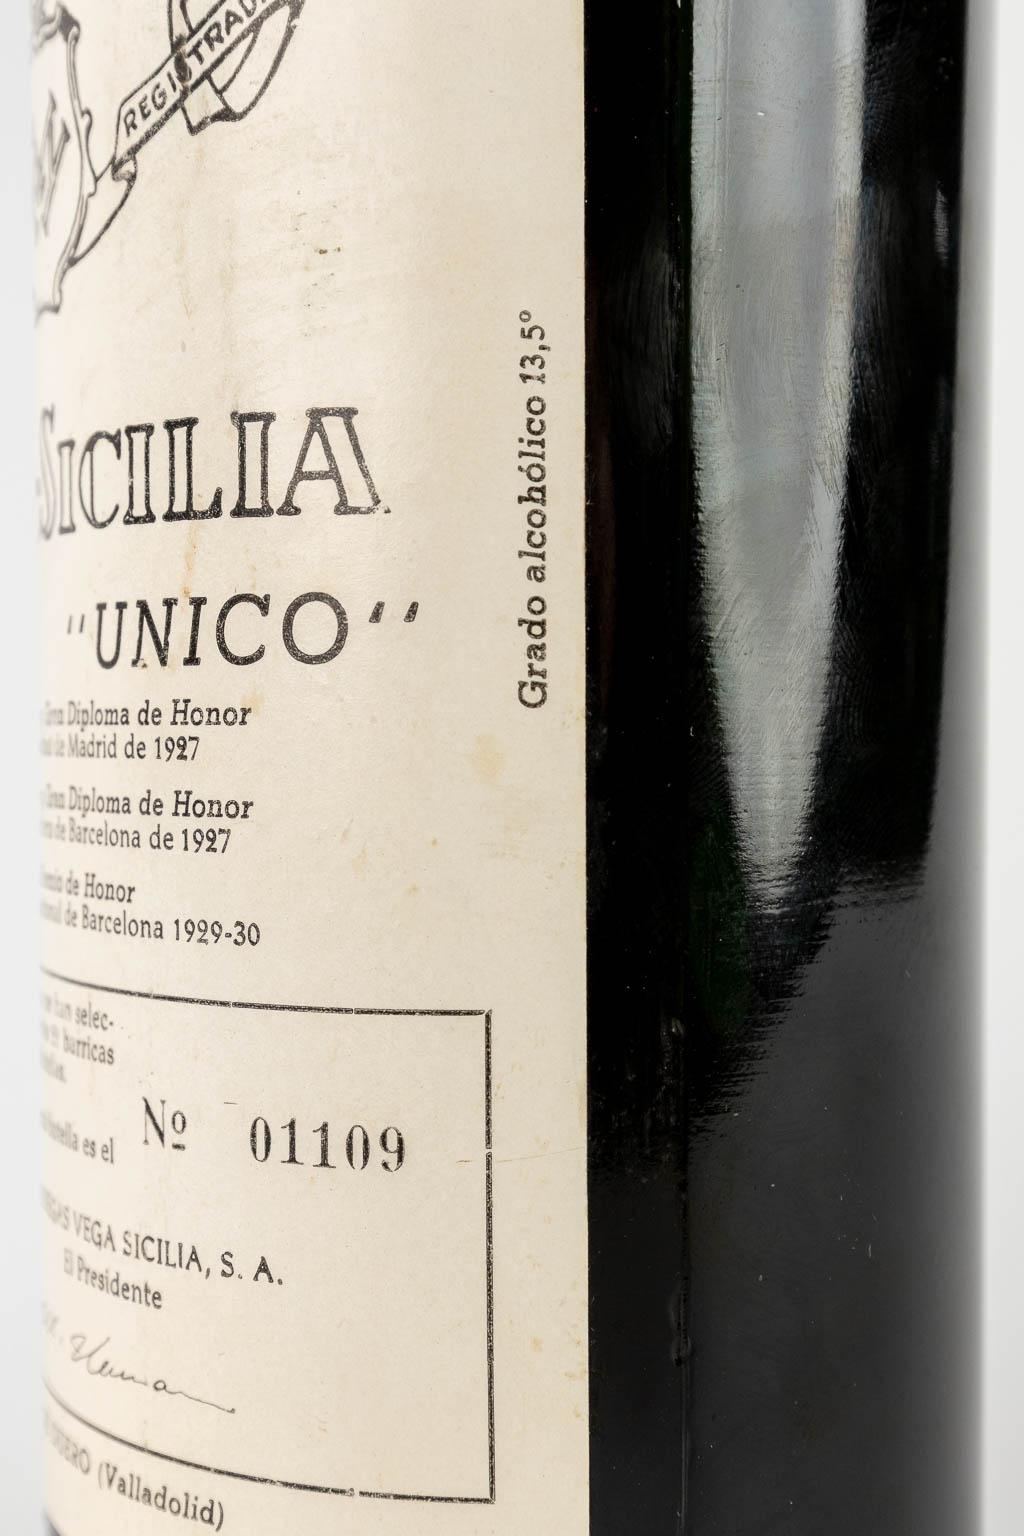 Een fles Vega Sicilia Reserva Special Unico 1979, fles 1109/6160. (Vintages 